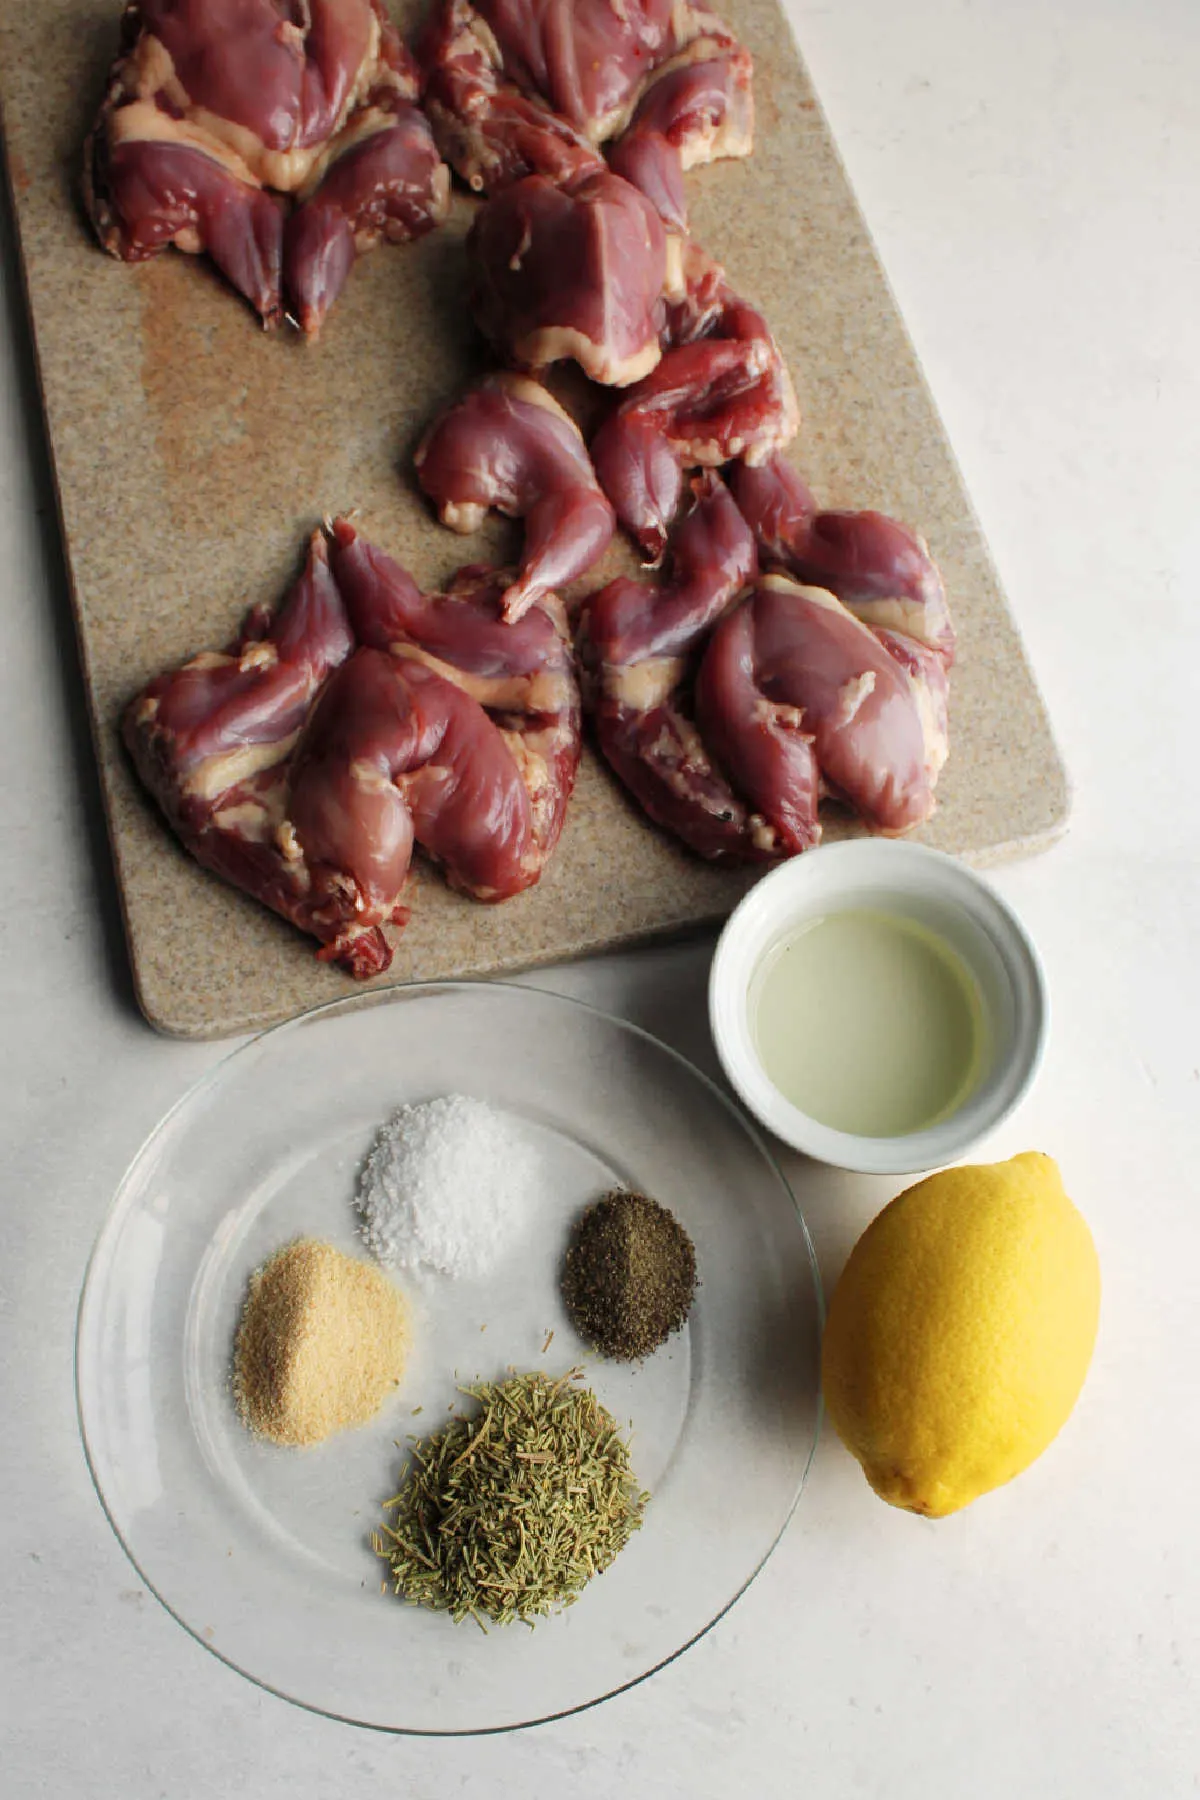 Ingredients for roasted quail including quail, lemon, oil, rosemary, garlic powder, salt and pepper.